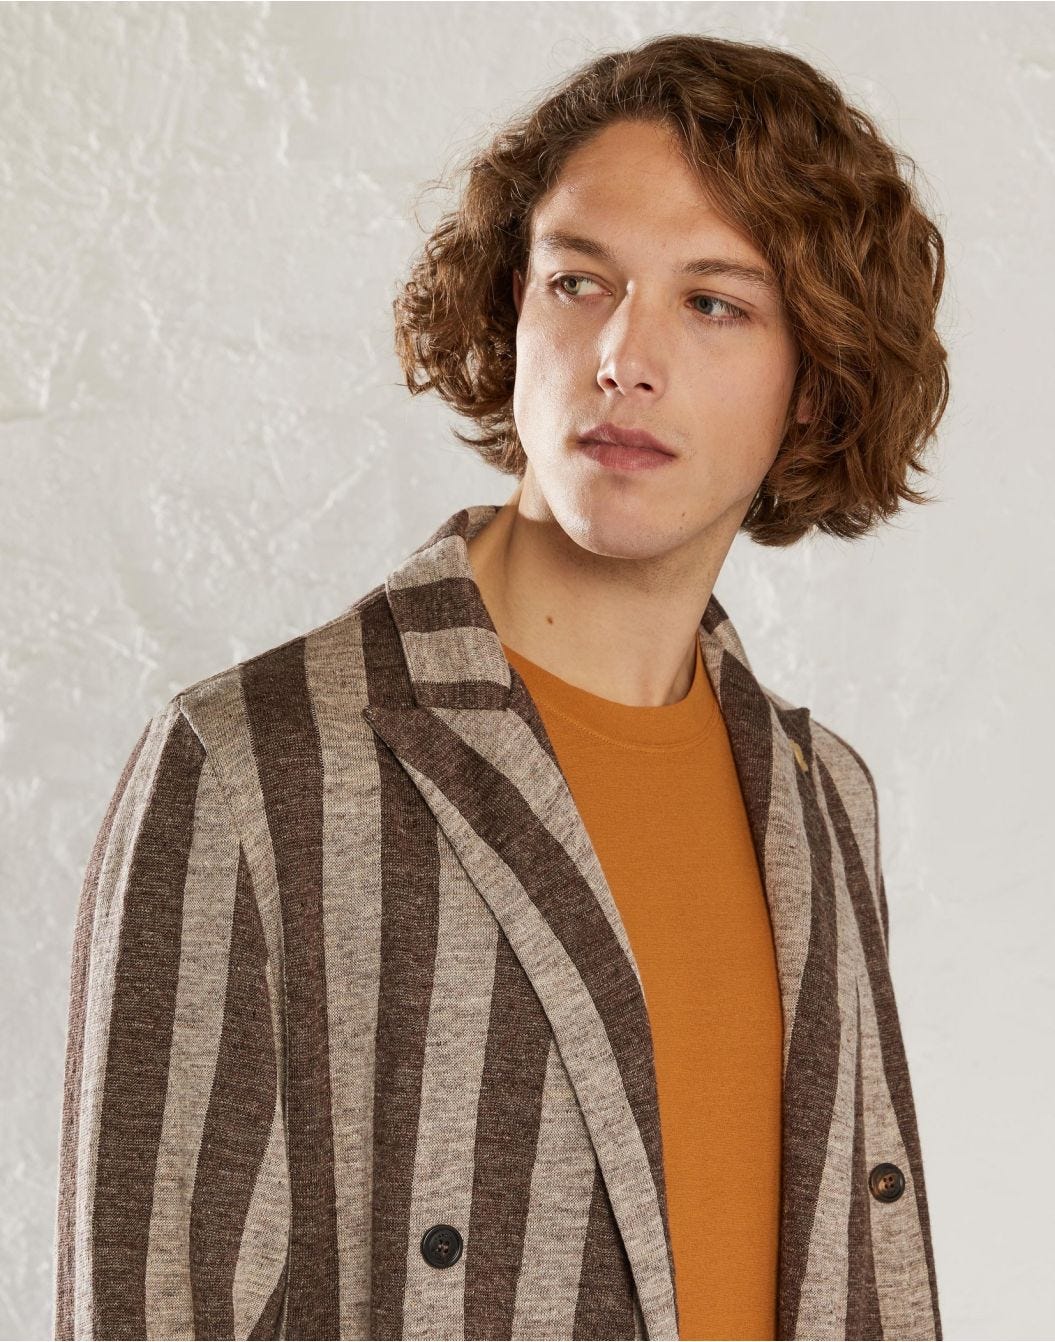 Melange linen double-breasted knit jacket